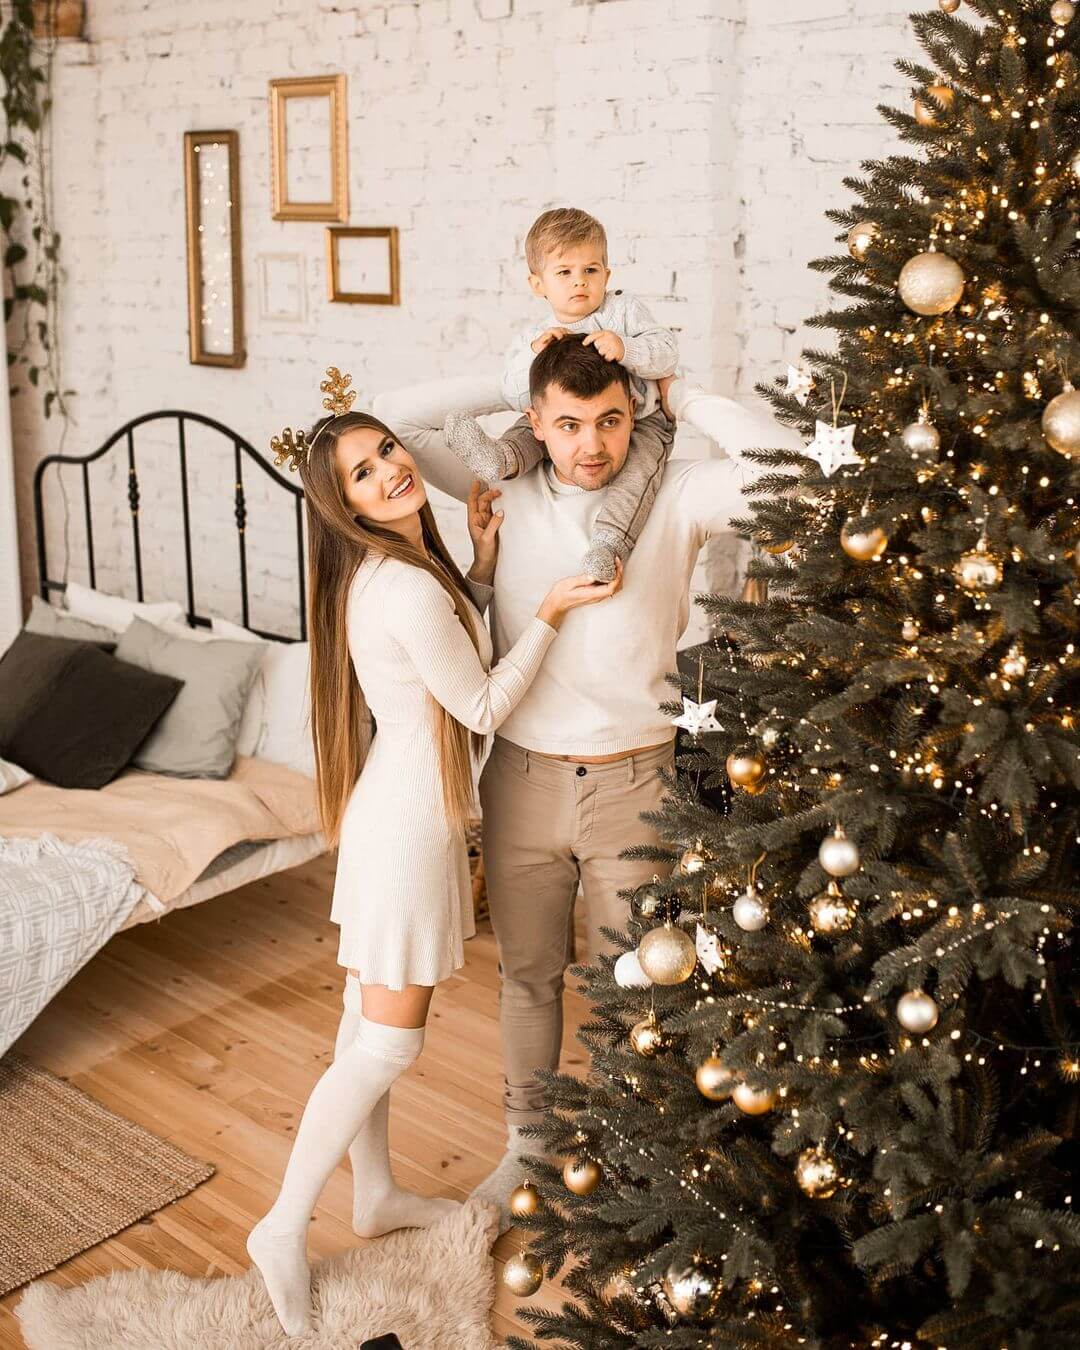 Christmas Photo Ideas For Families